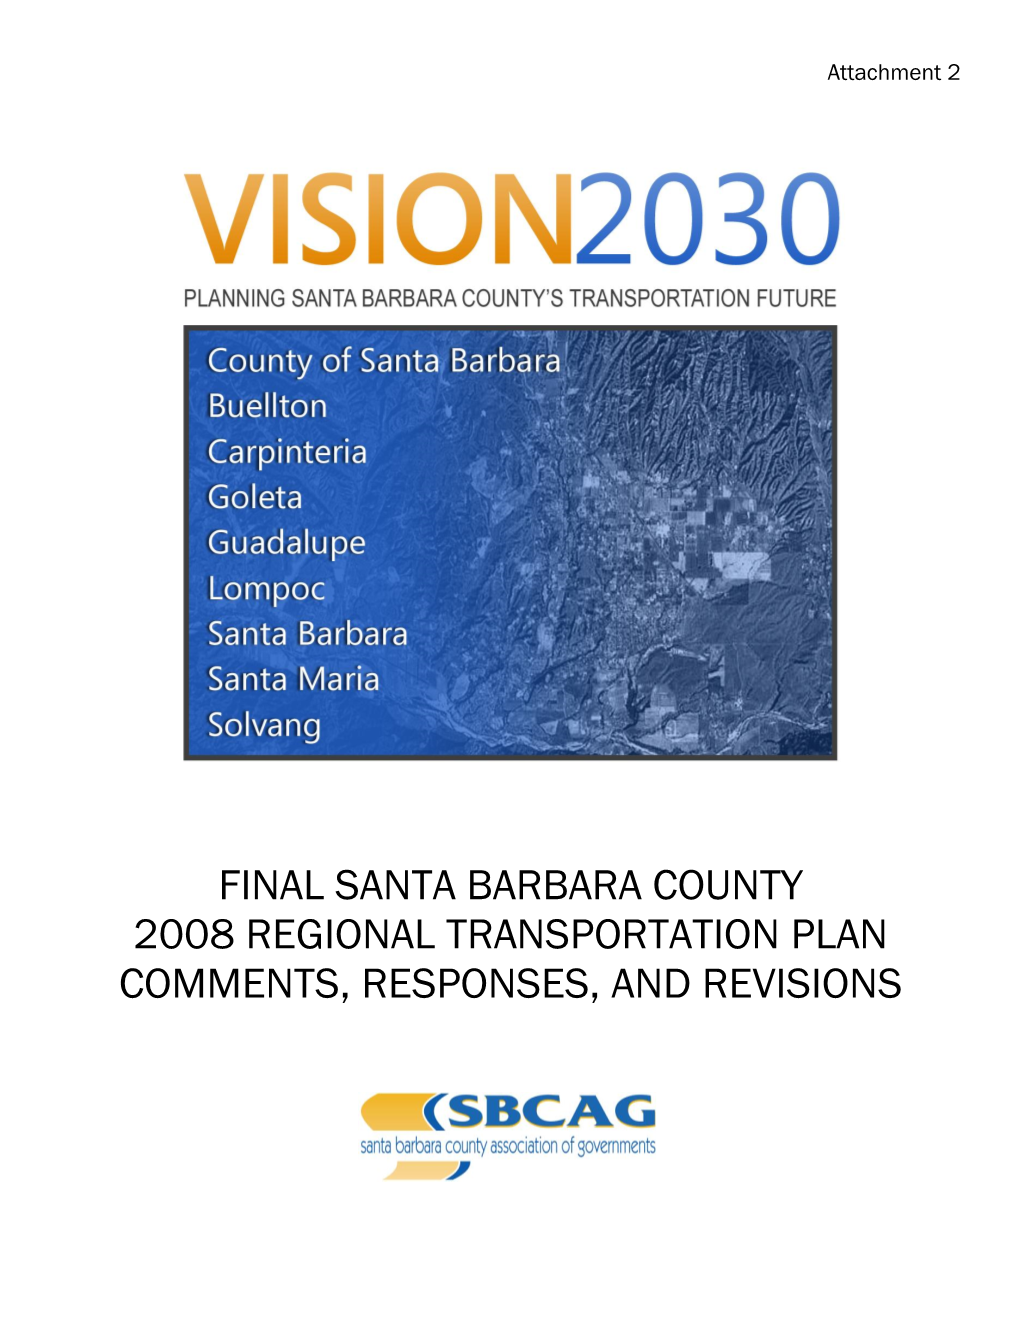 Final Santa Barbara County 2008 Regional Transportation Plan Comments, Responses, and Revisions